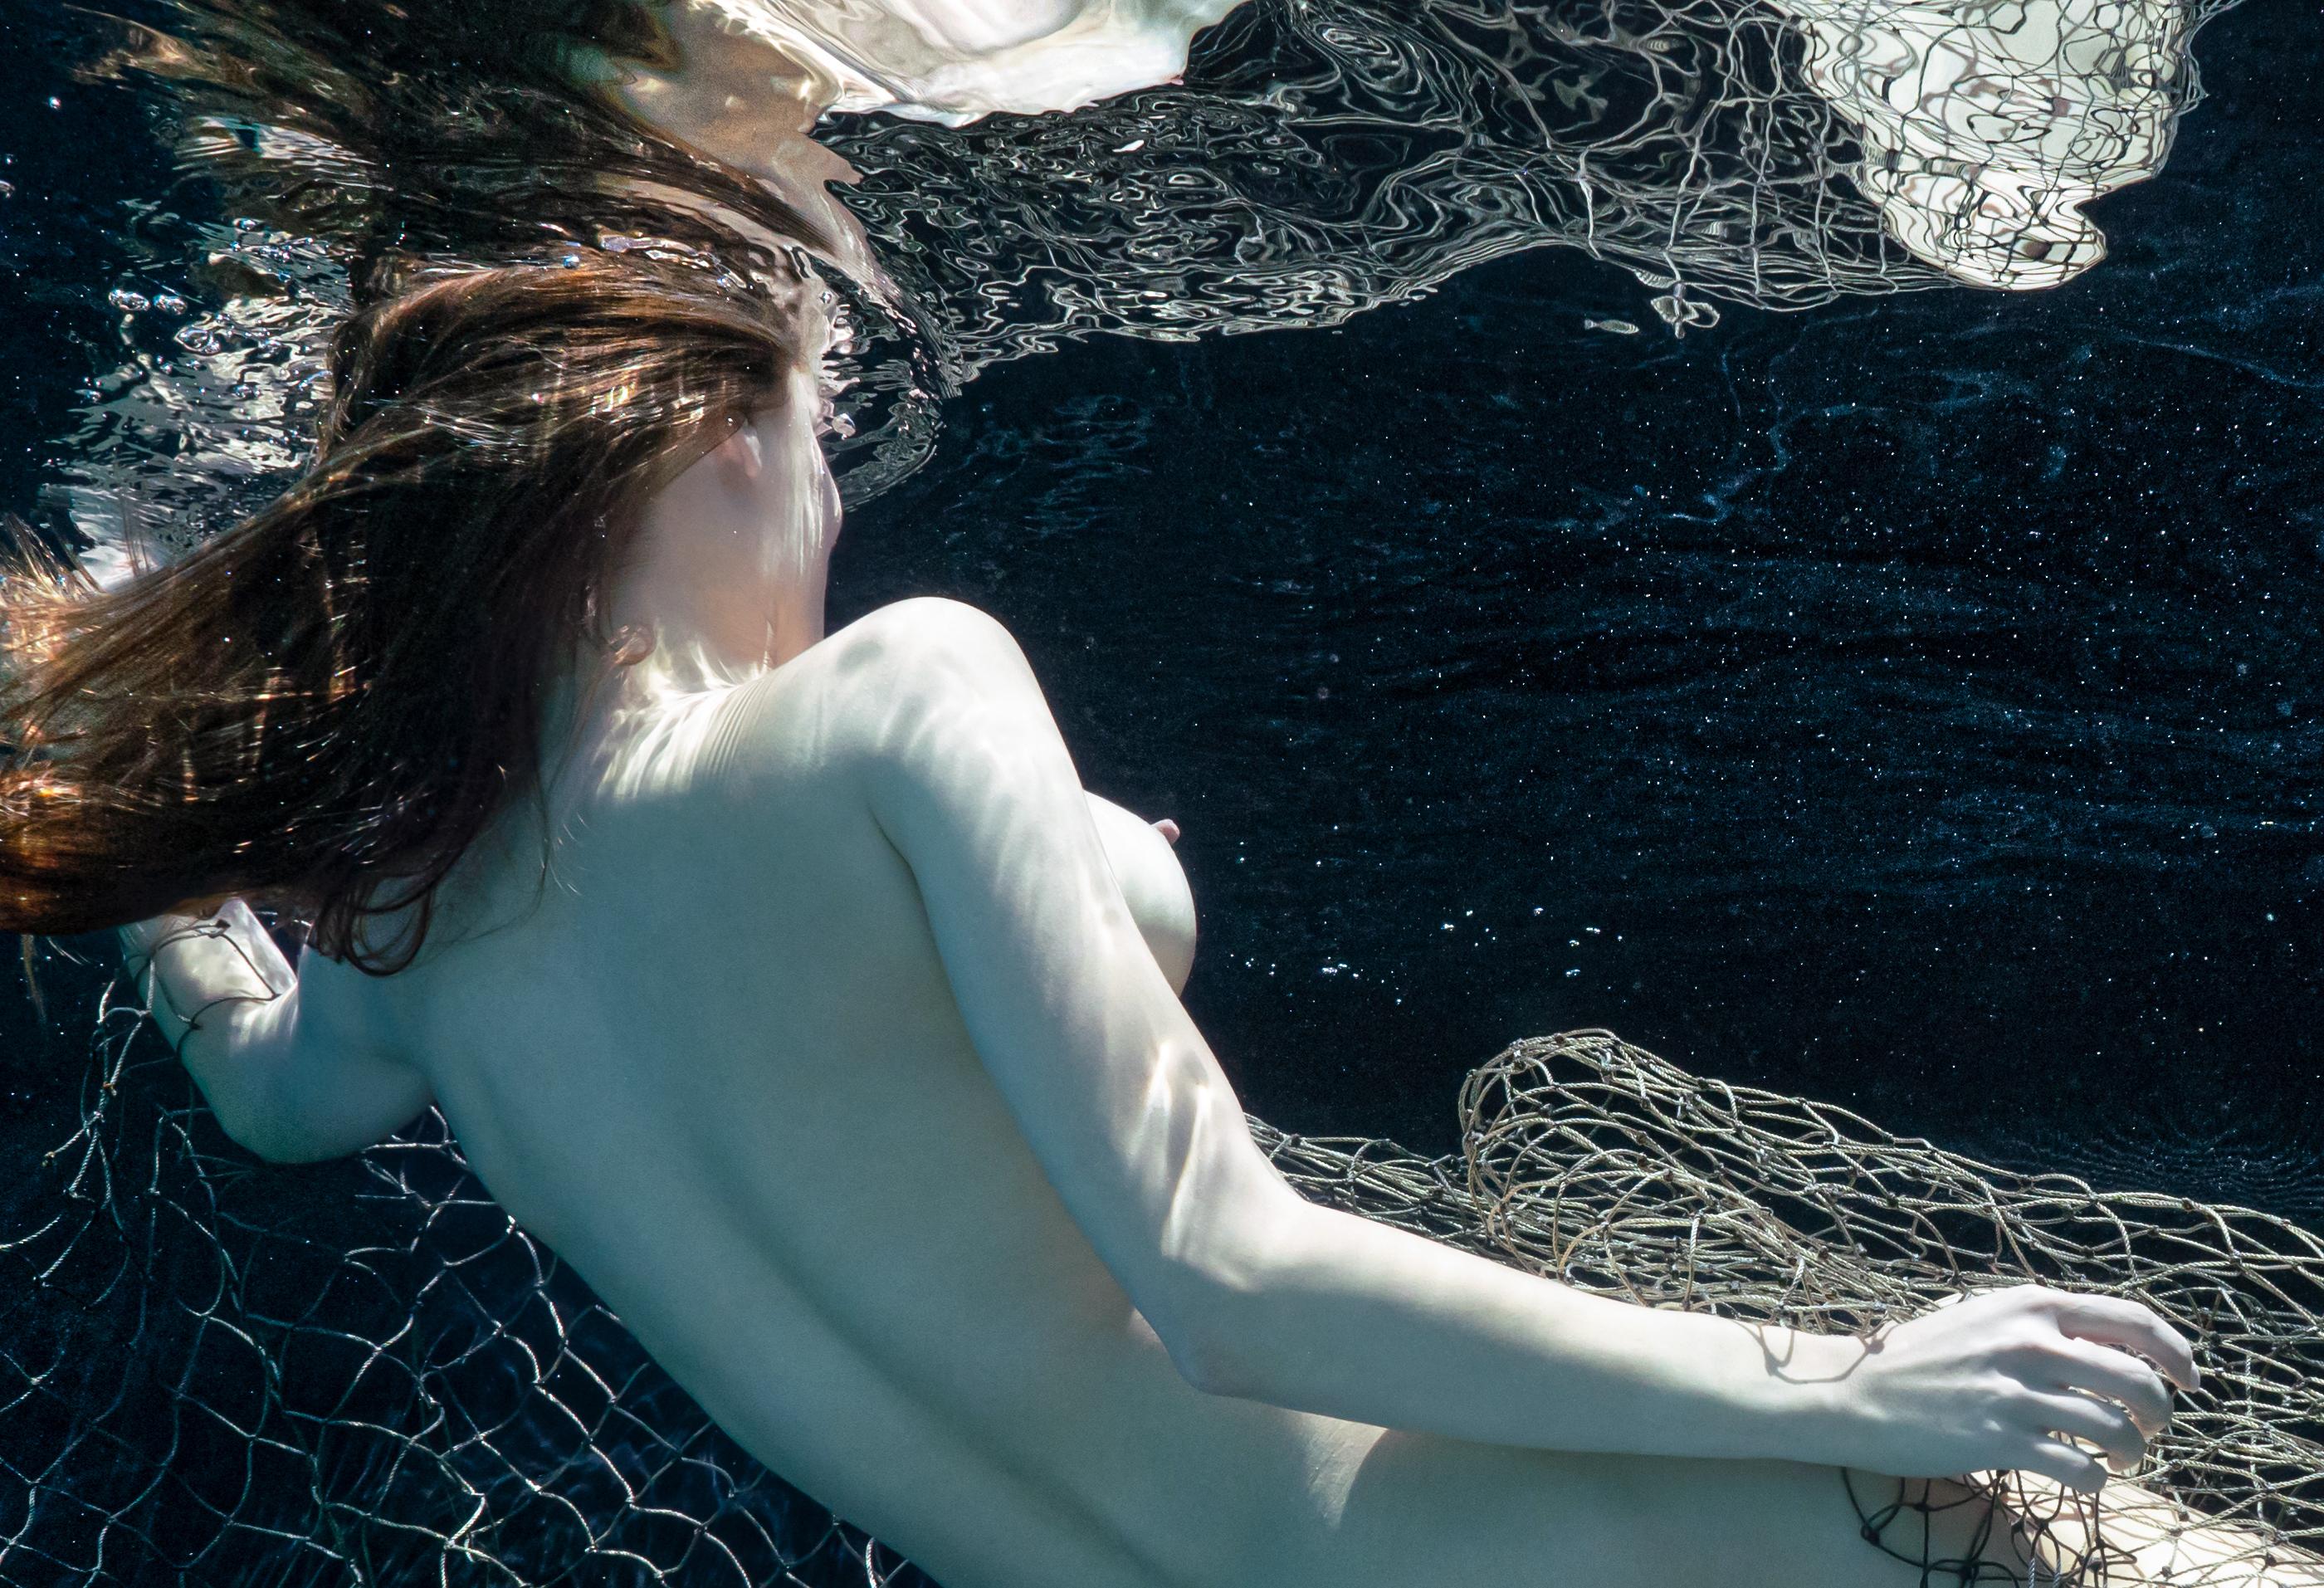 Constellation - underwater nude photograph - archival pigment print 24x35